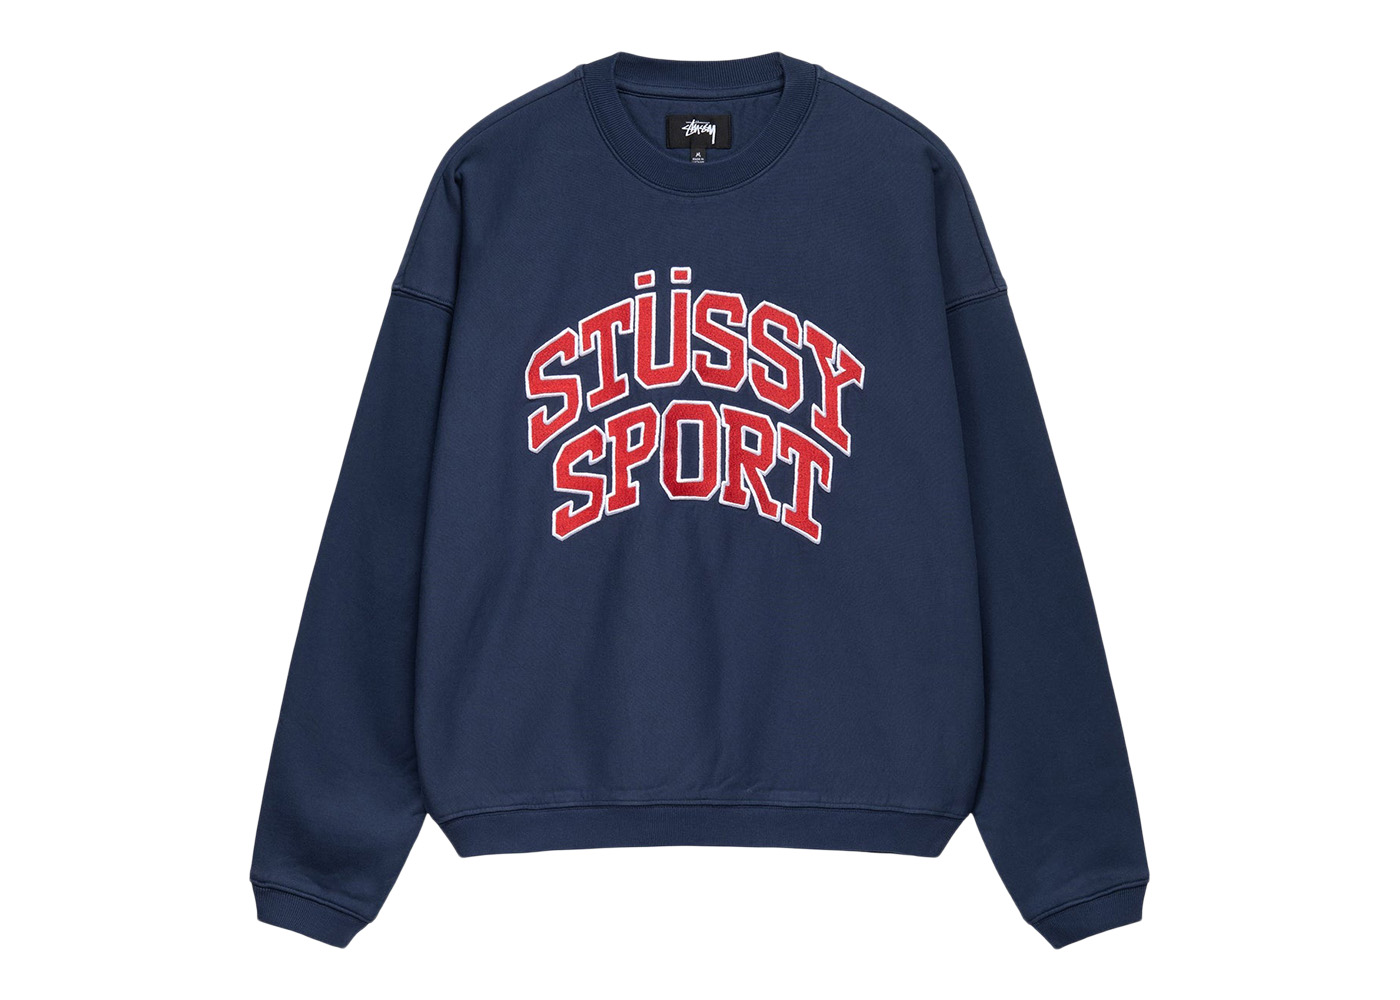 Stussy sports-